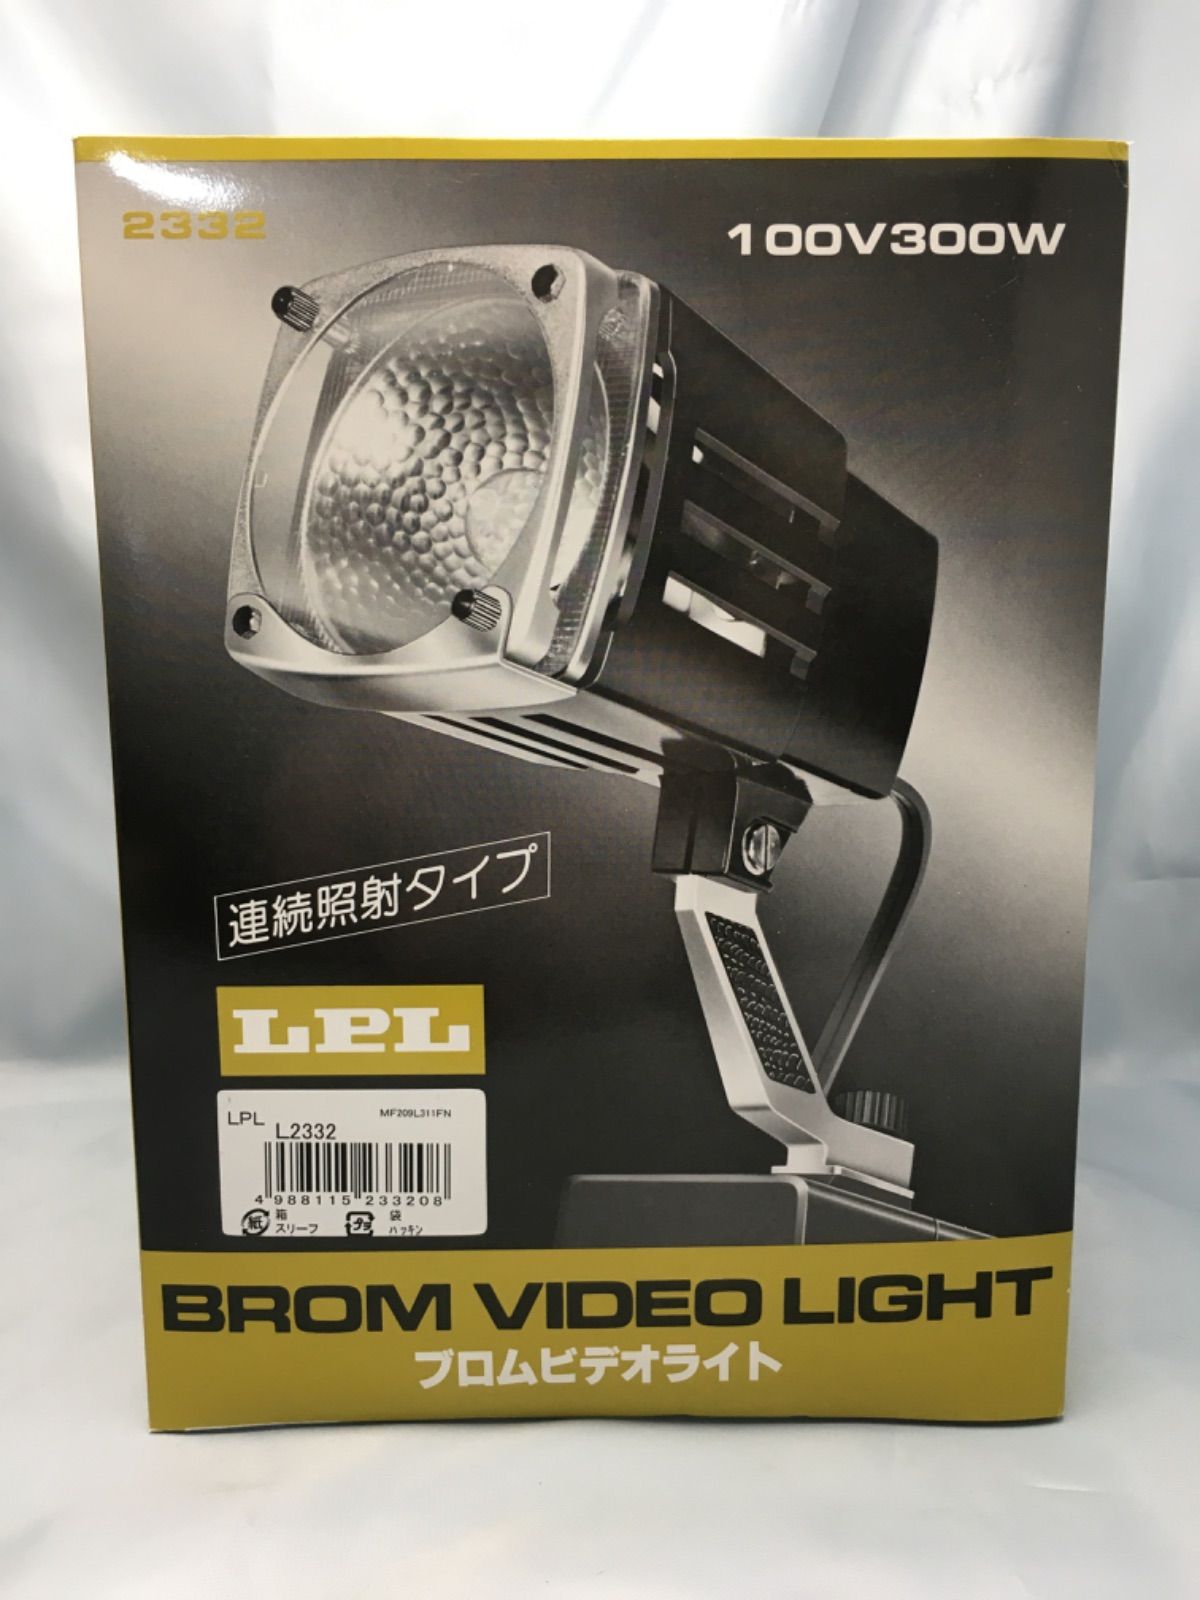 LPL ビデオライト ブロムビデオライト 300Wタイプ L2332 - メルカリ